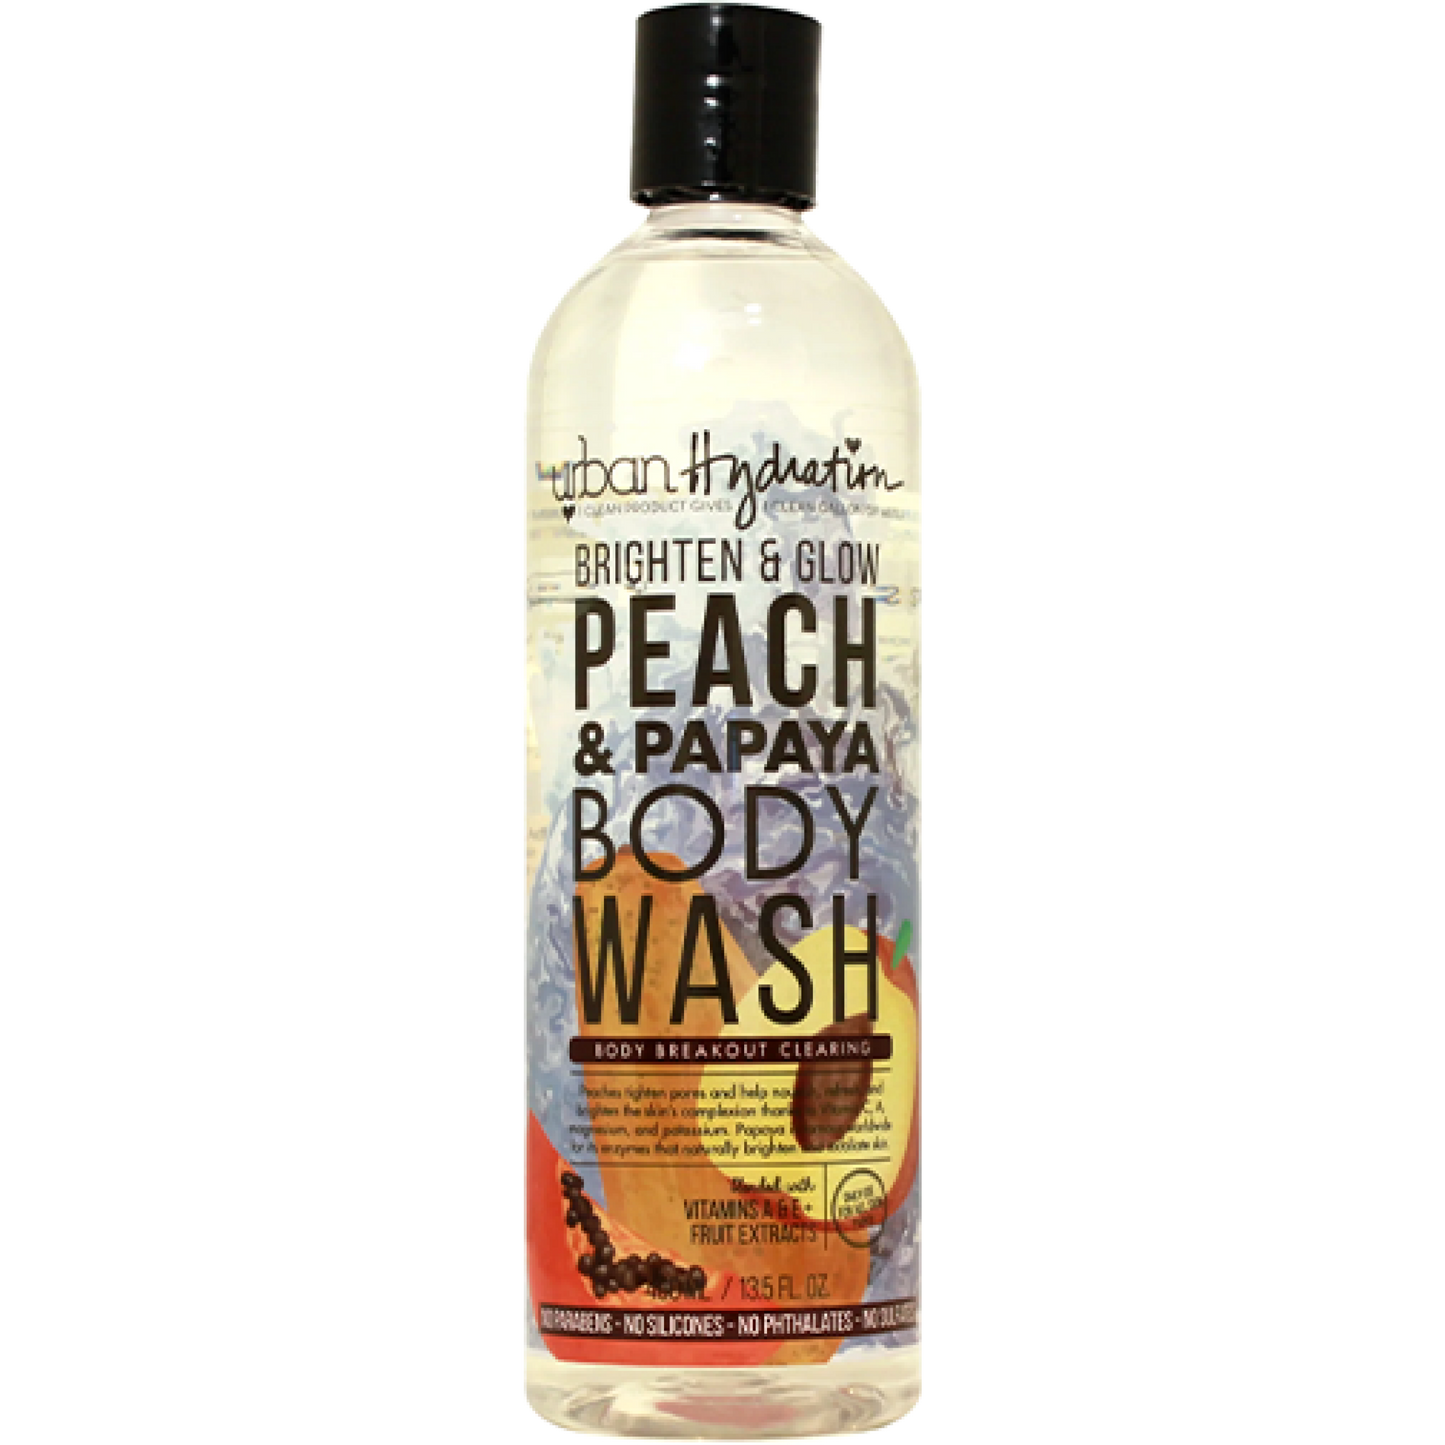 Brighten & Glow Peach & Papaya Body Wash